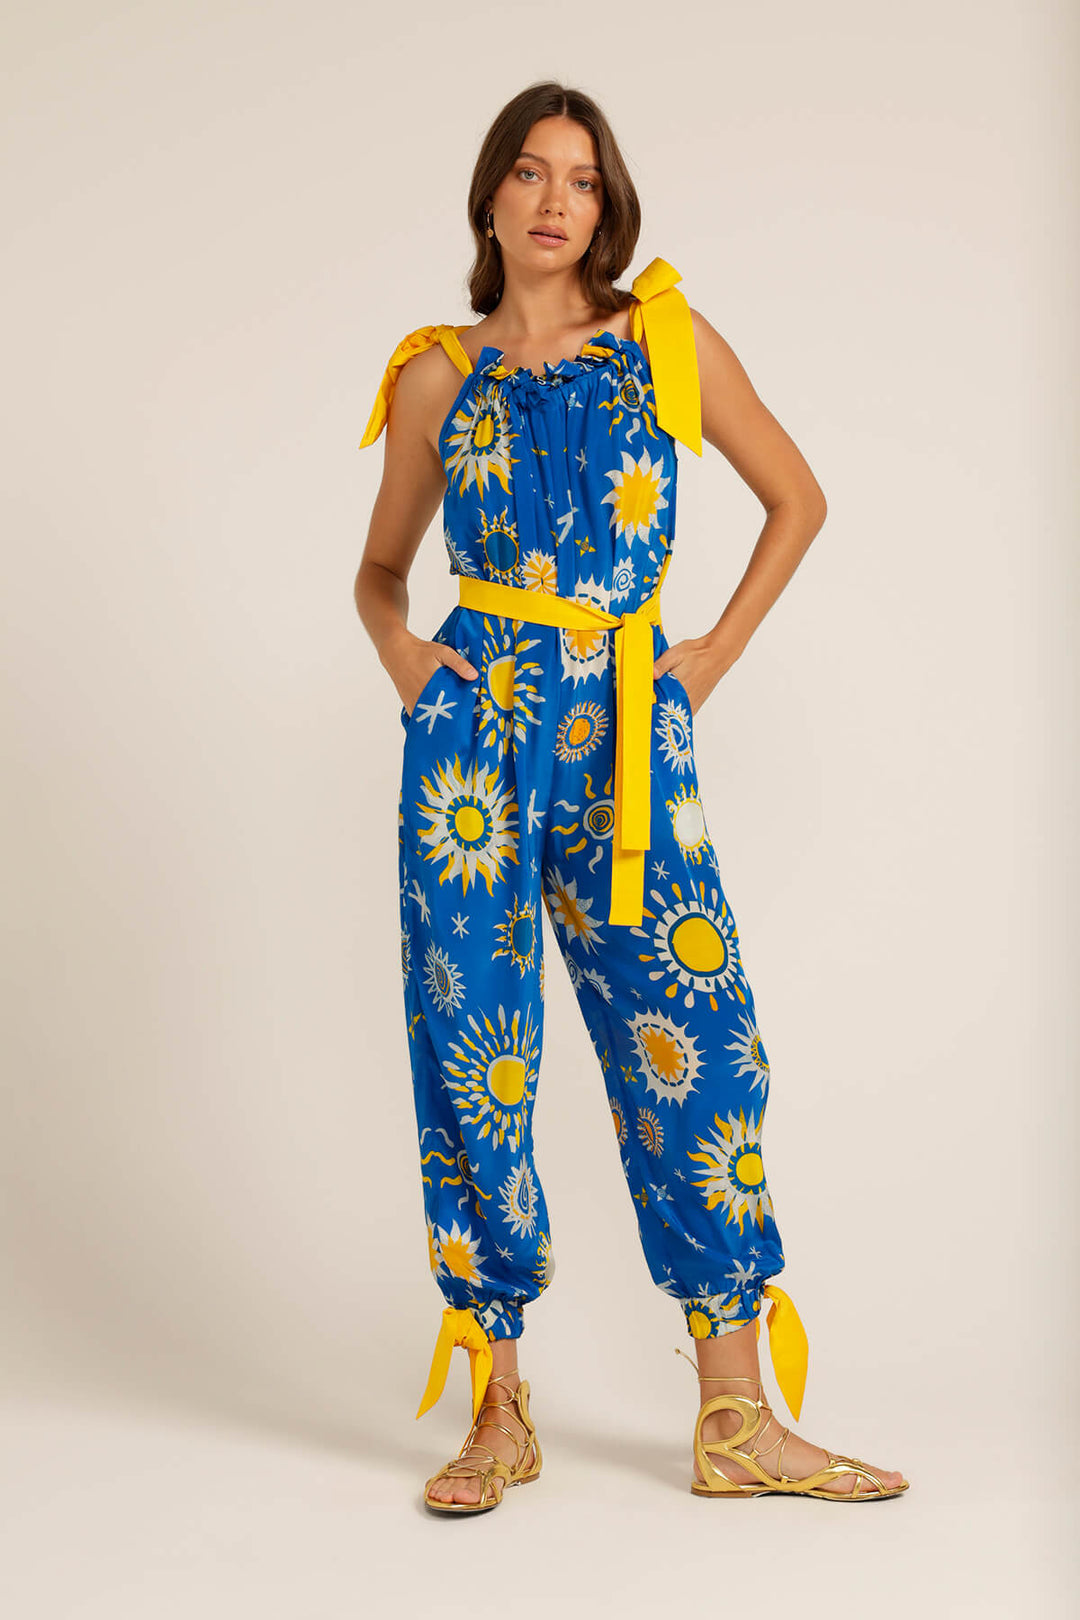 Love Bonfire The Label | Blue Yellow Sun Print Jumpsuit Romper Dungarees | Azure Skies Jumpsuit | Australian Womens Fashion